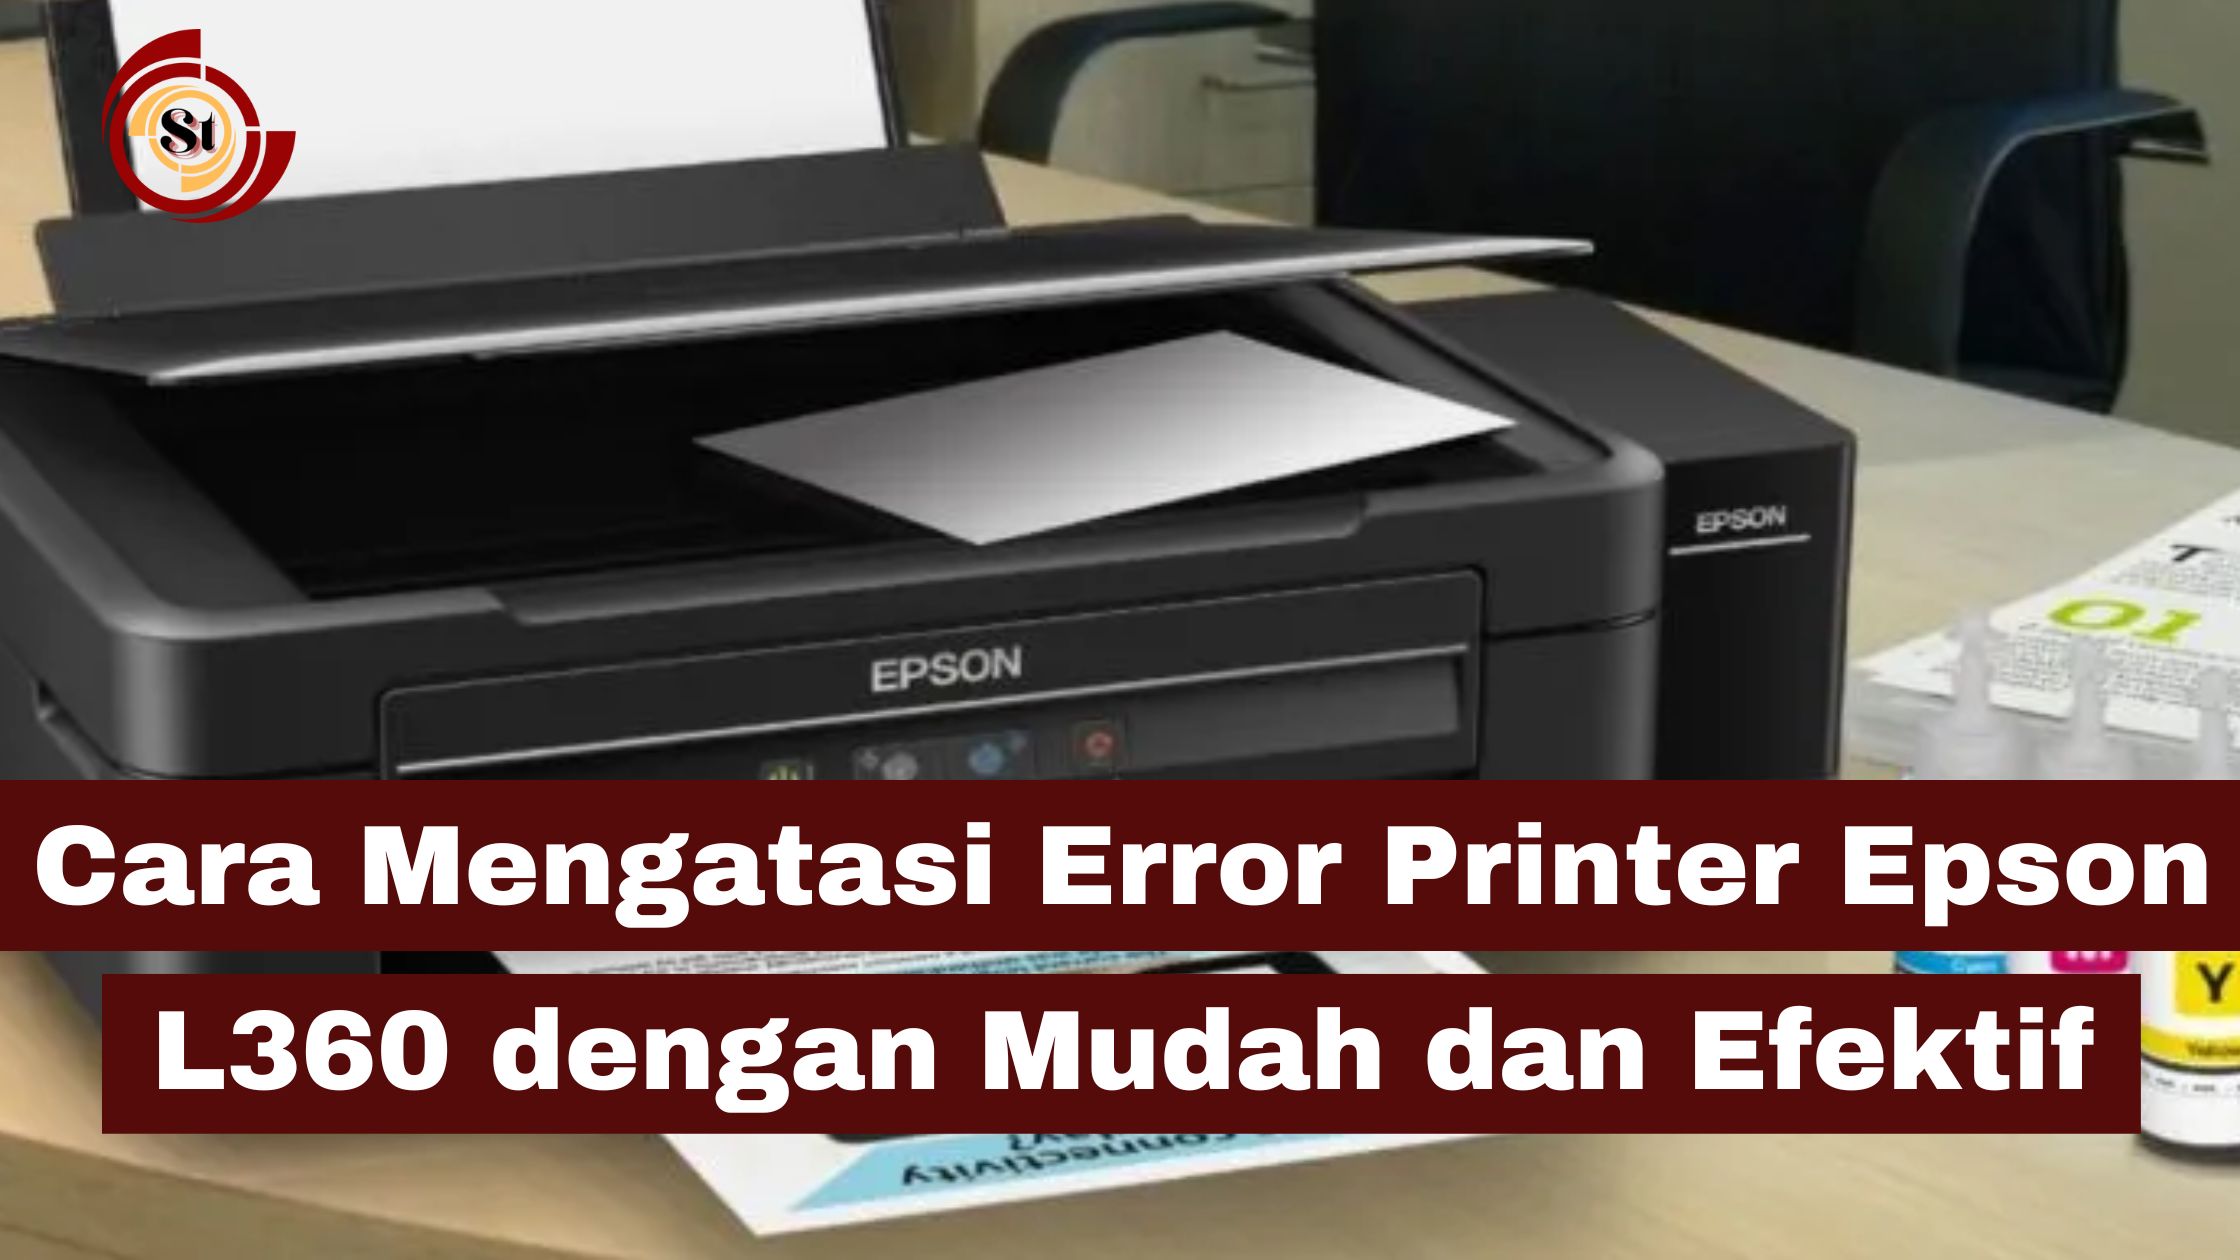 Cara Mengatasi Error Printer Epson L360